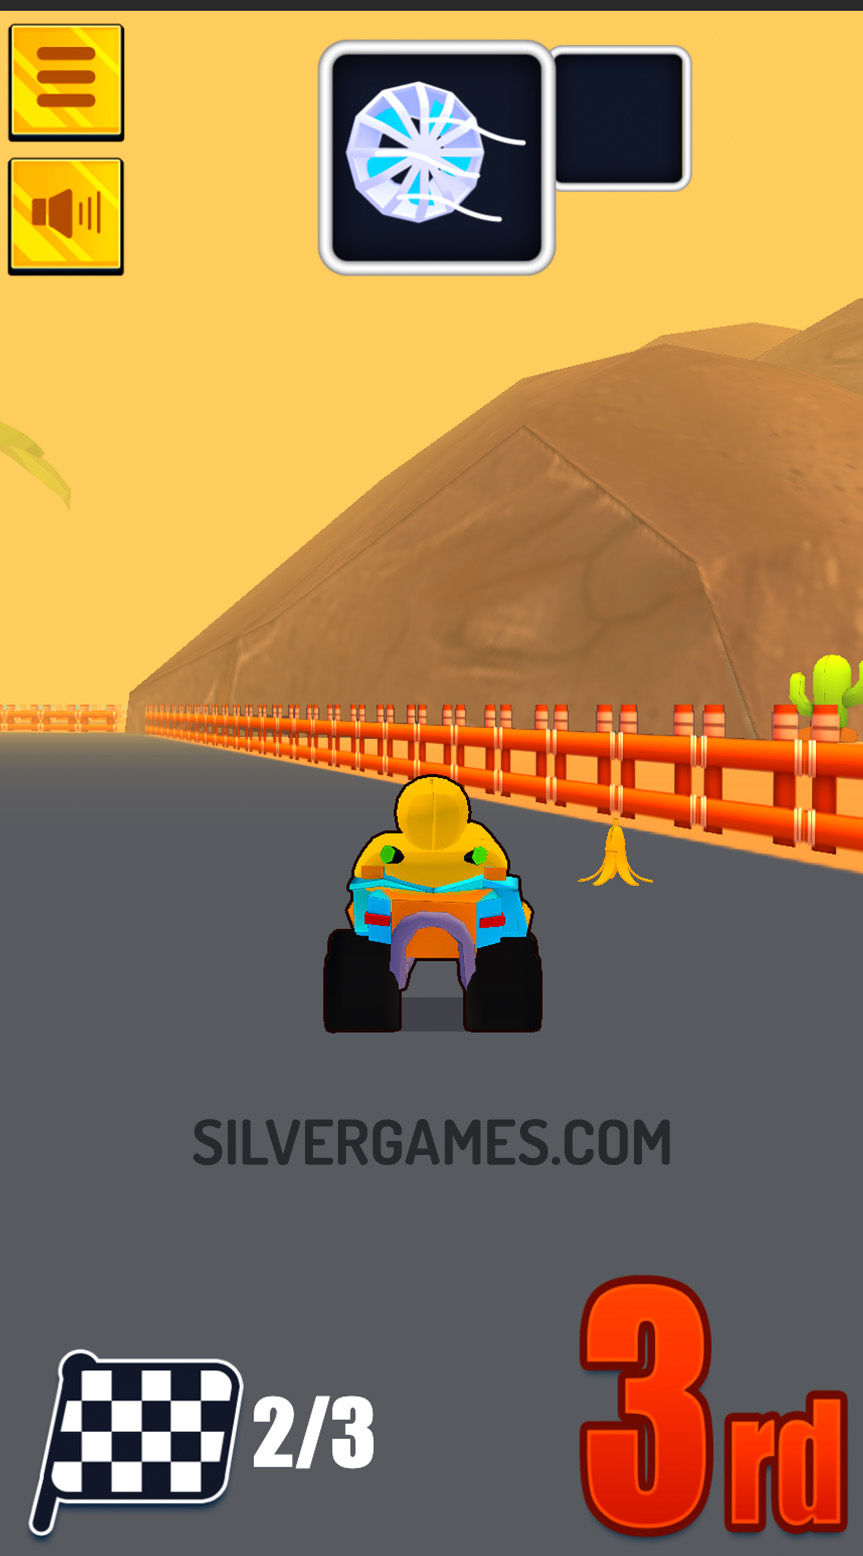 SmashKarts.io - Play Online on SilverGames 🕹️